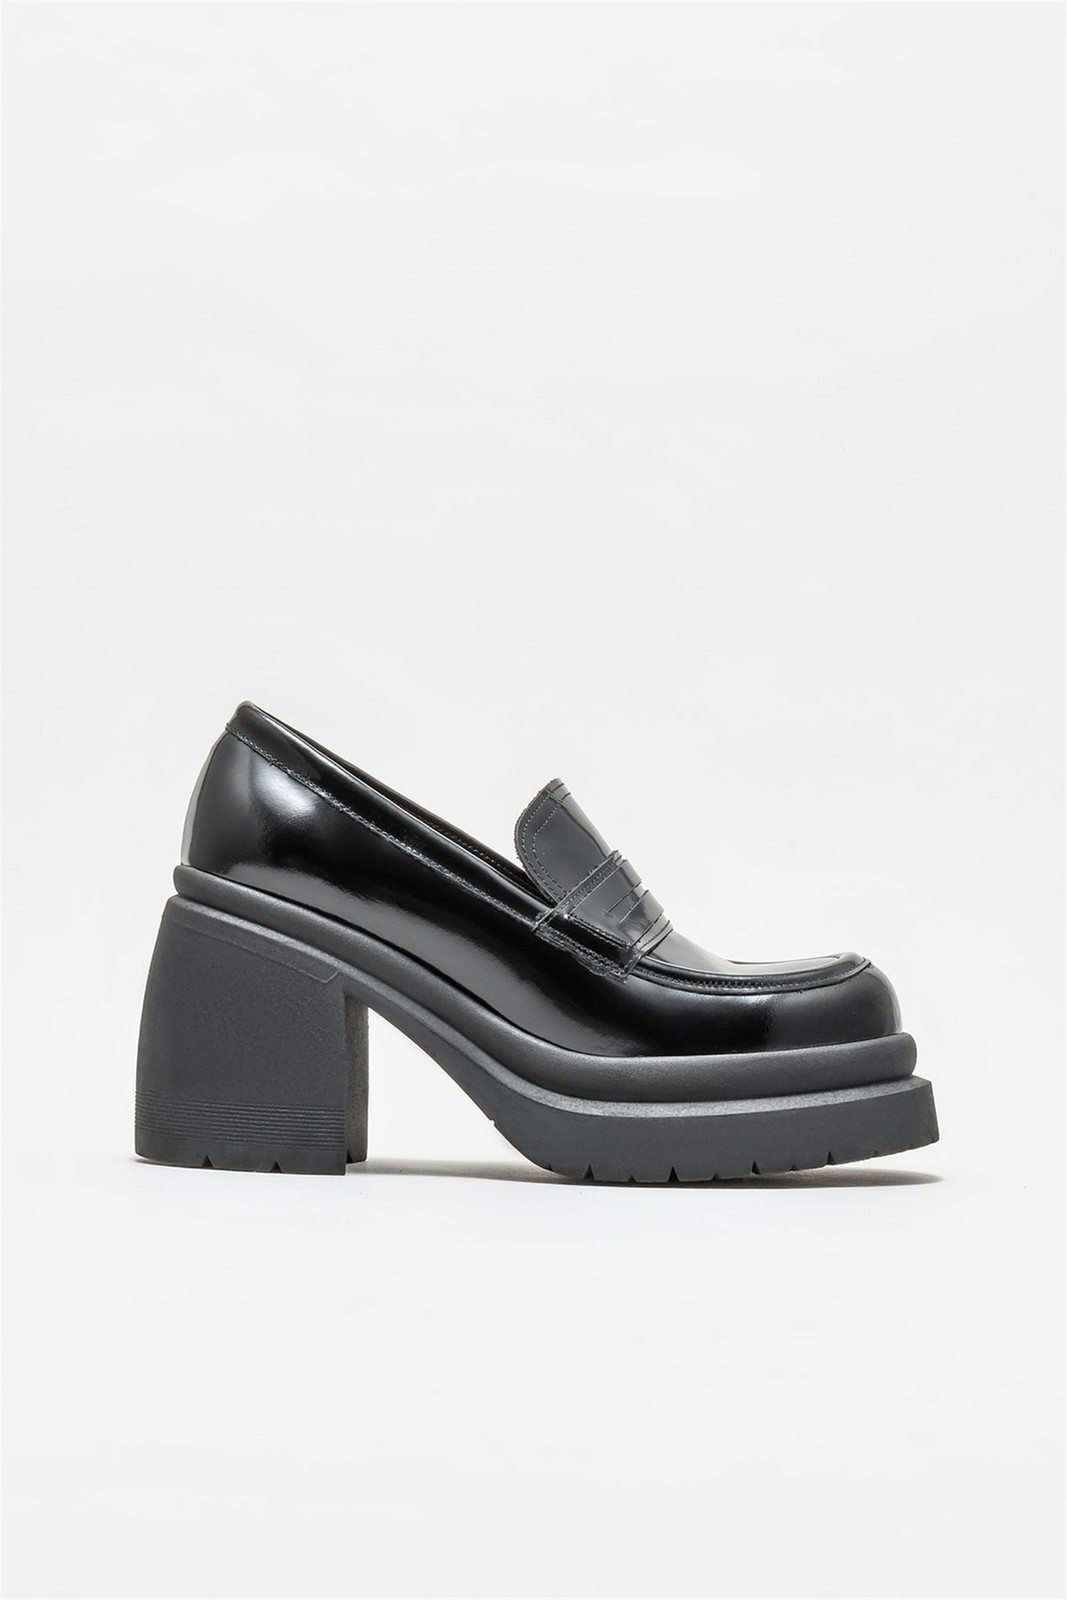 Elle Shoes Black Leather Women's Heeled Shoes